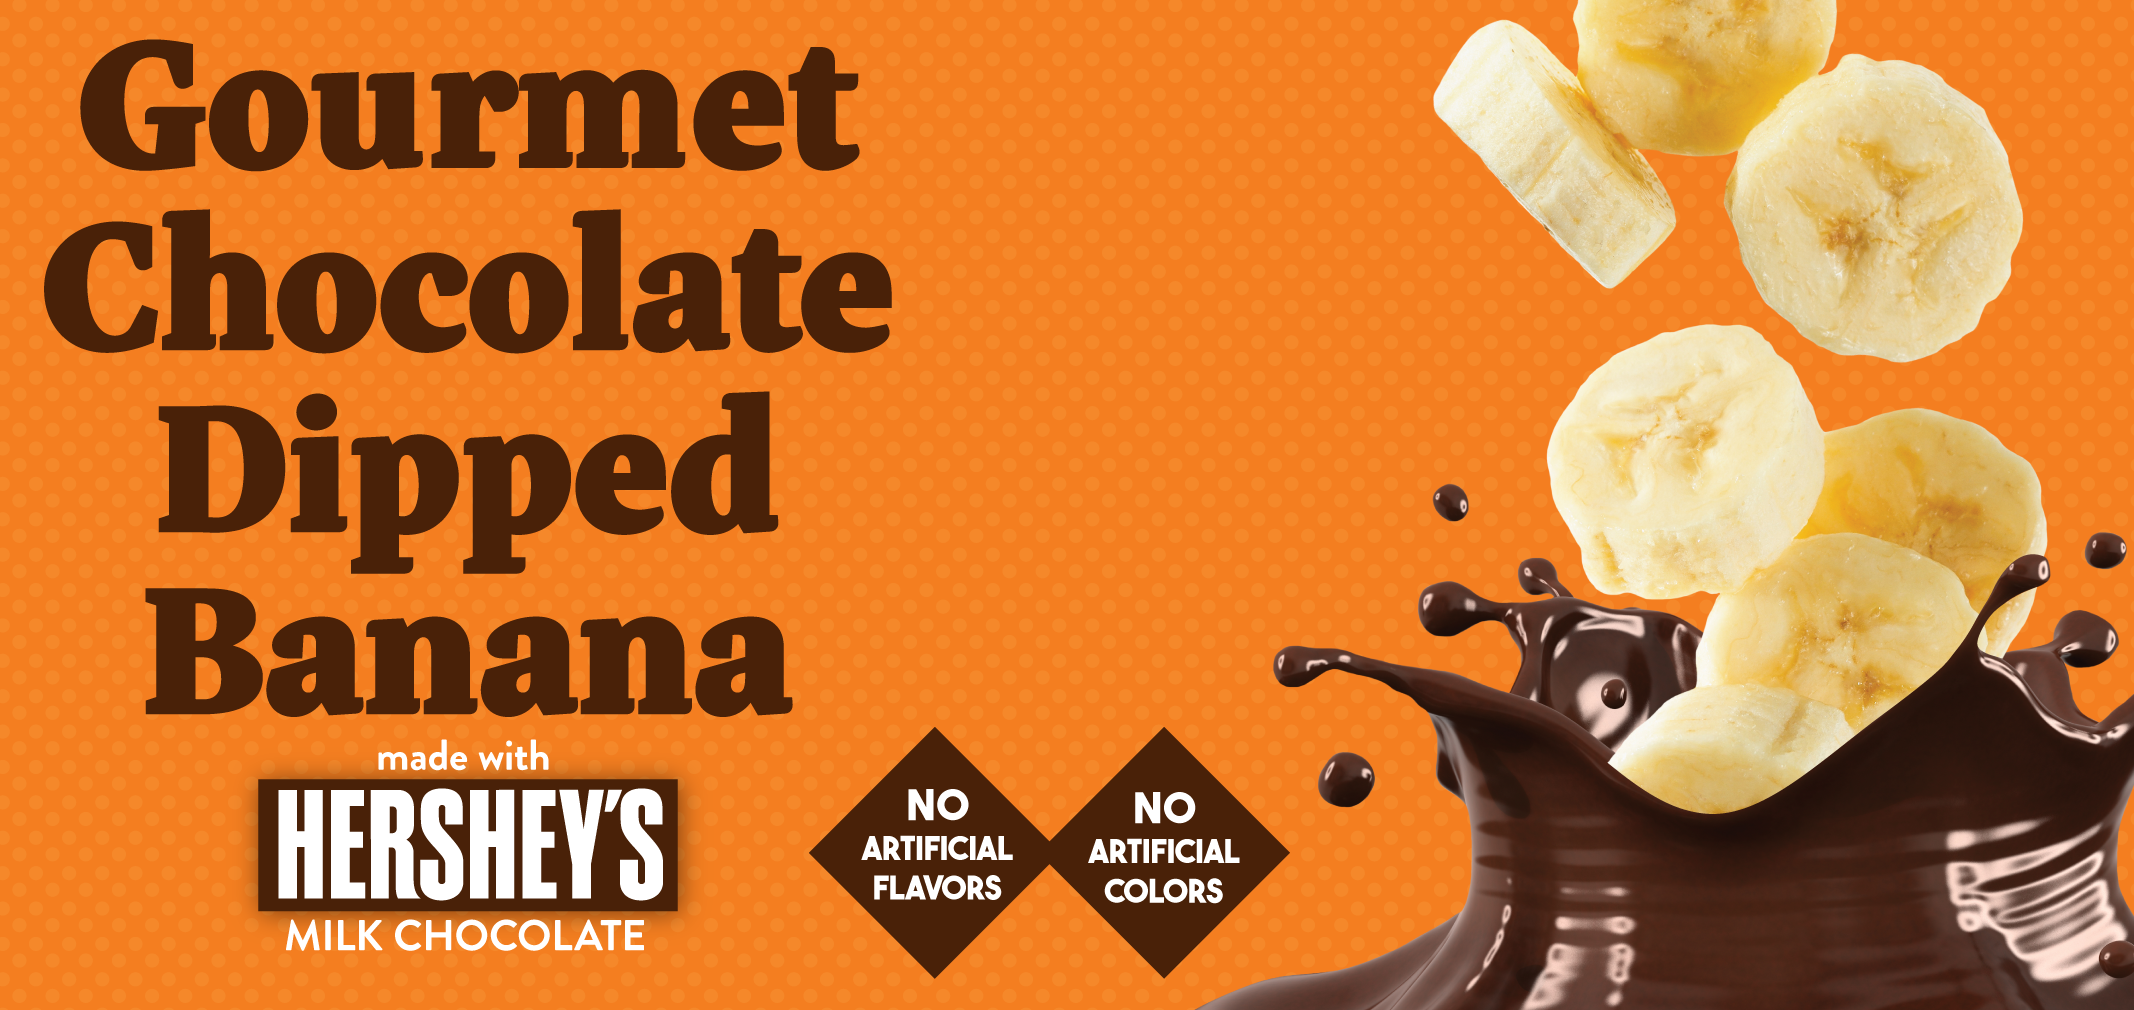 gourmet chocolate dipped banana made with Hershey's® milk chocolate label image